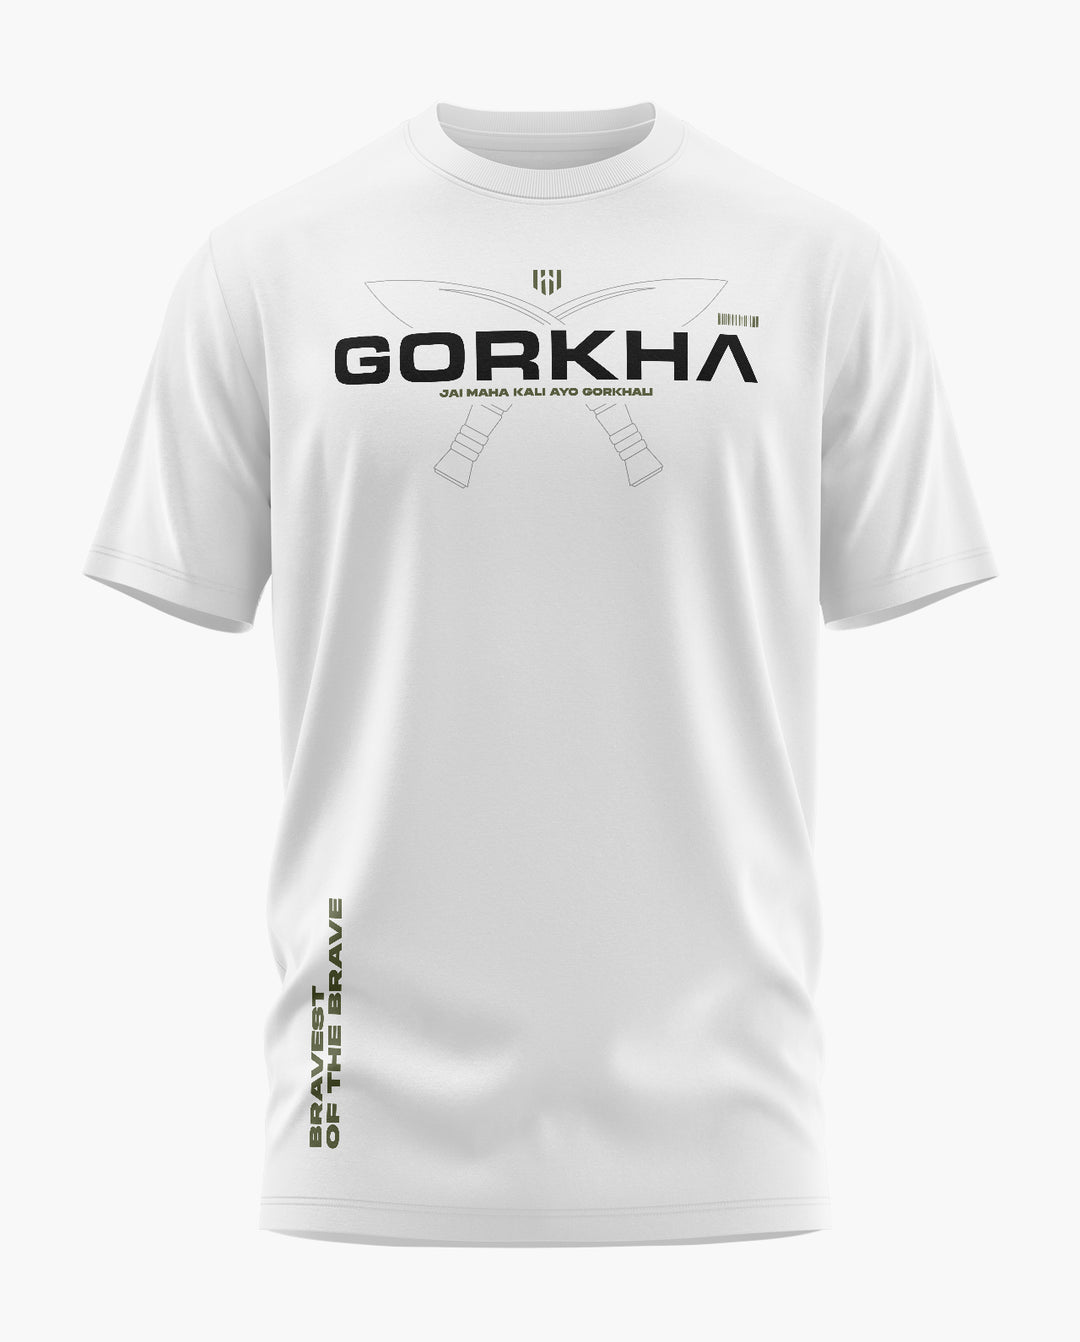 9th Gorkha Prestige T-Shirt